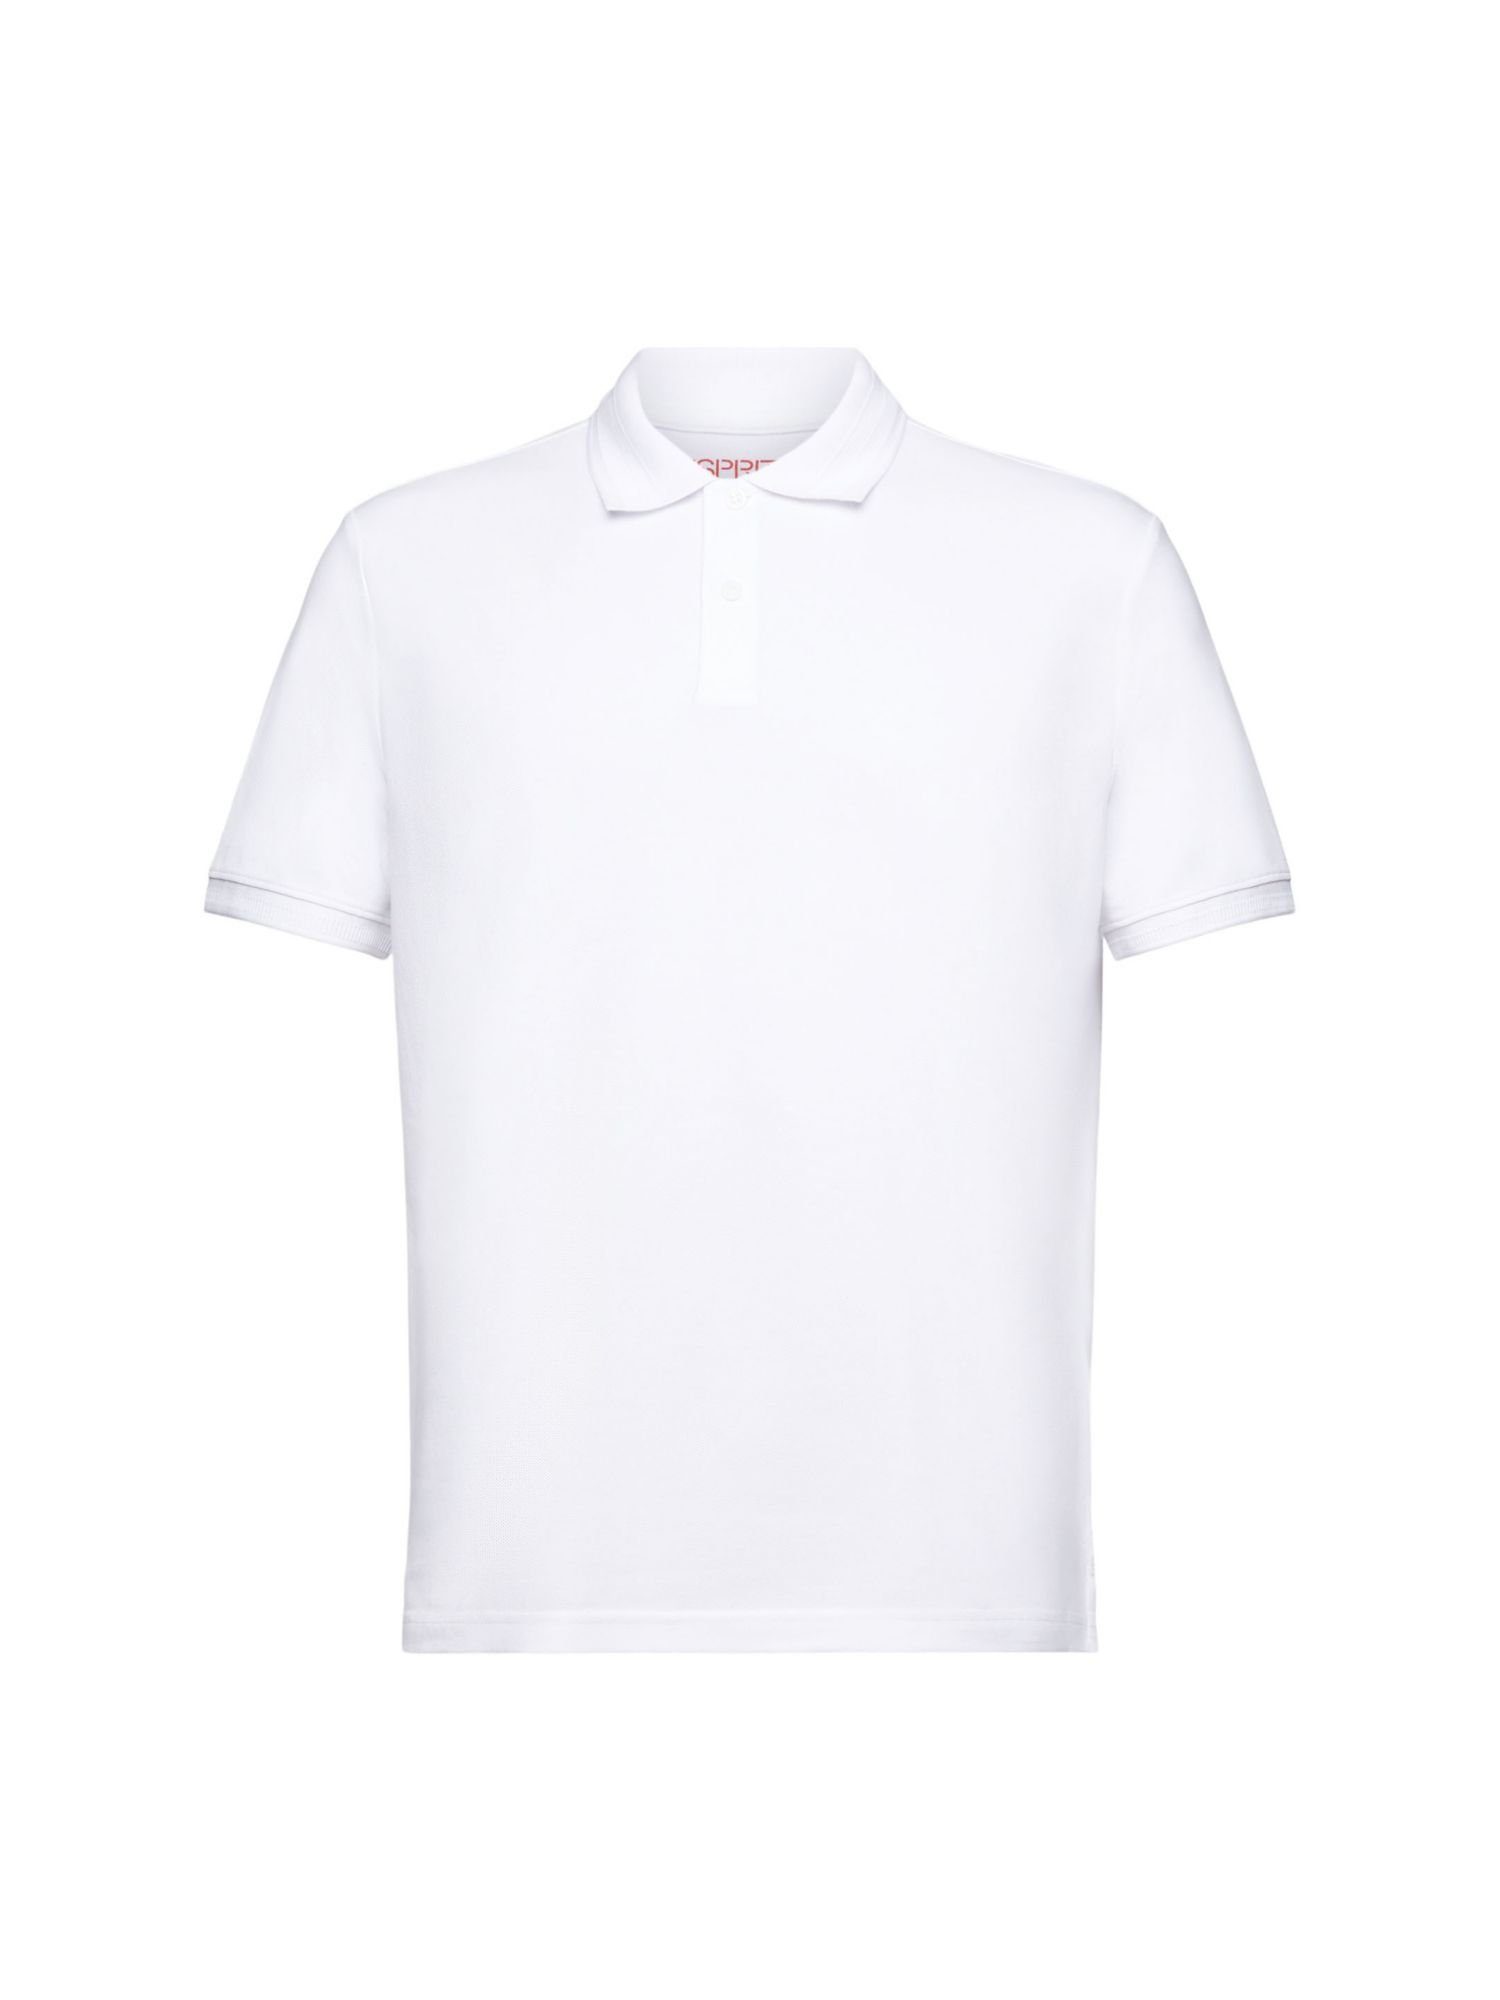 Esprit Poloshirt WHITE Poloshirt Baumwoll-Piqué aus